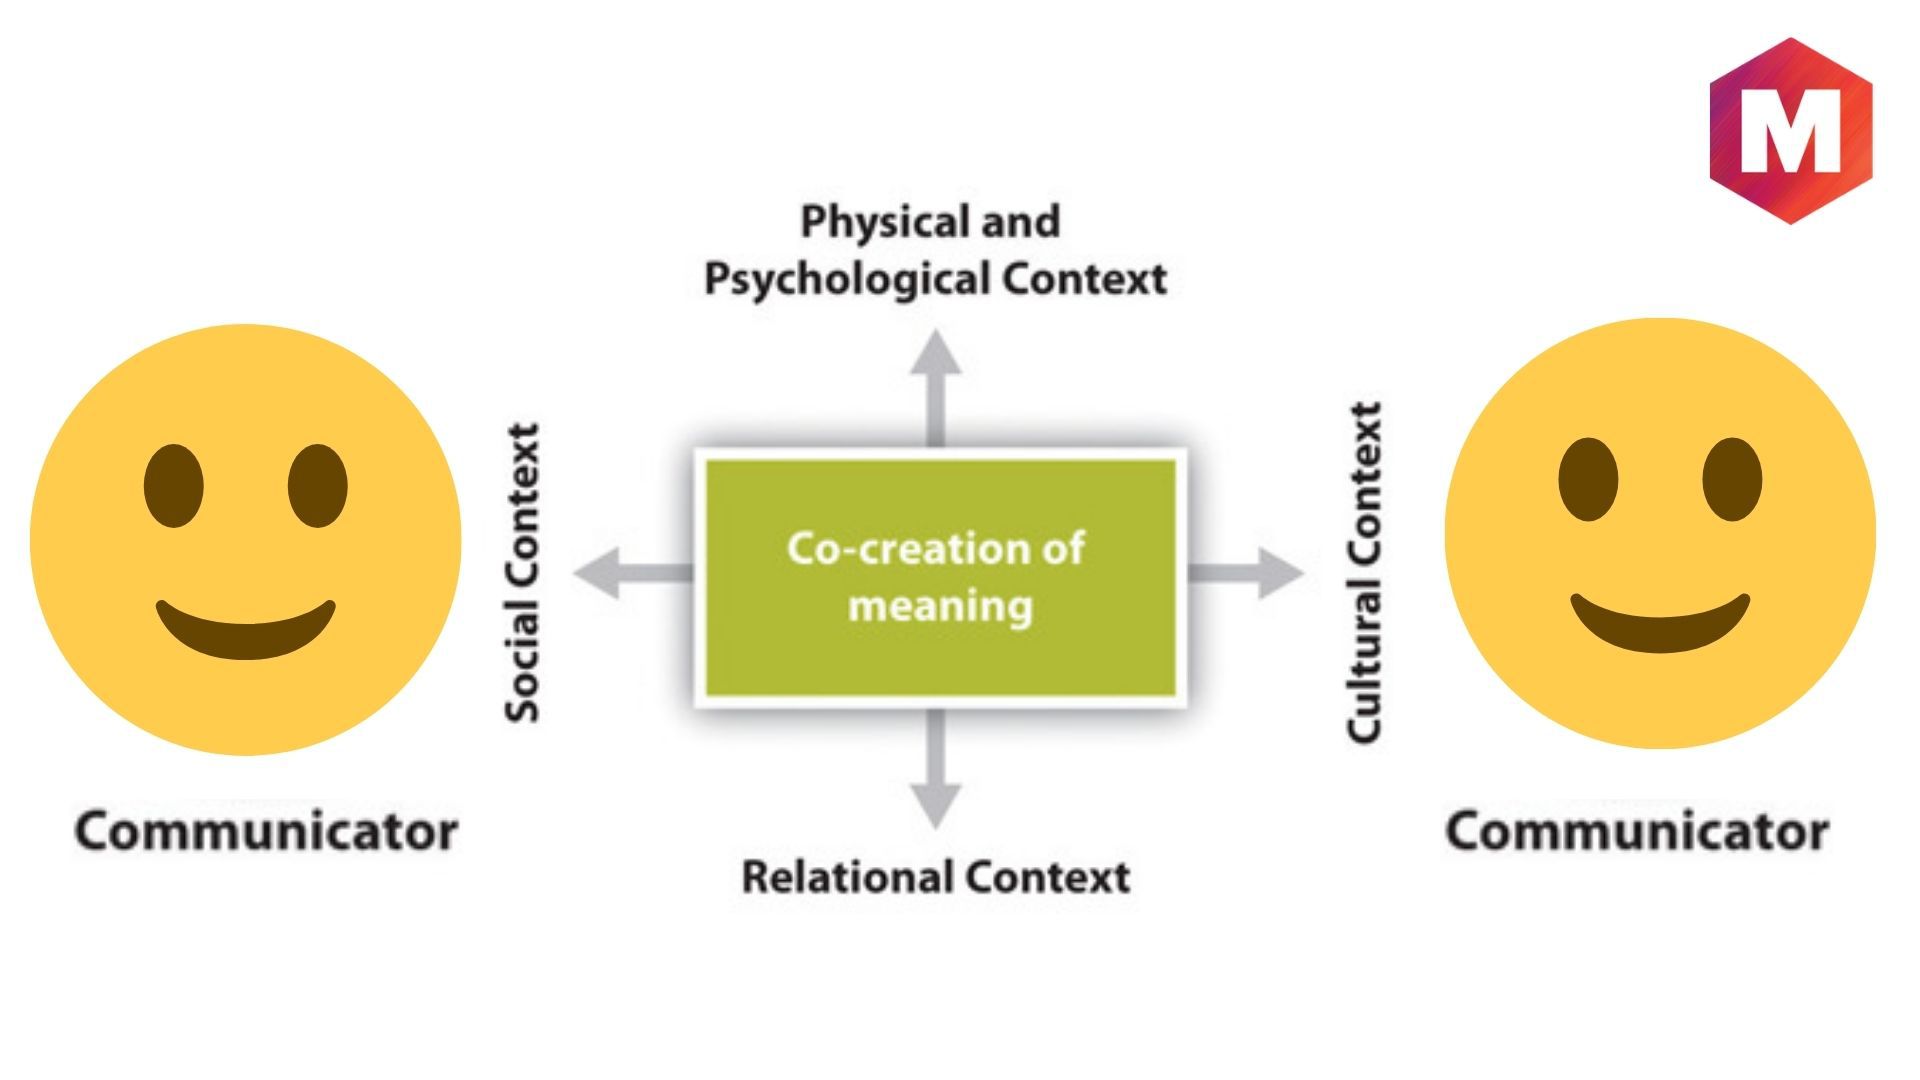 transactional model of communication